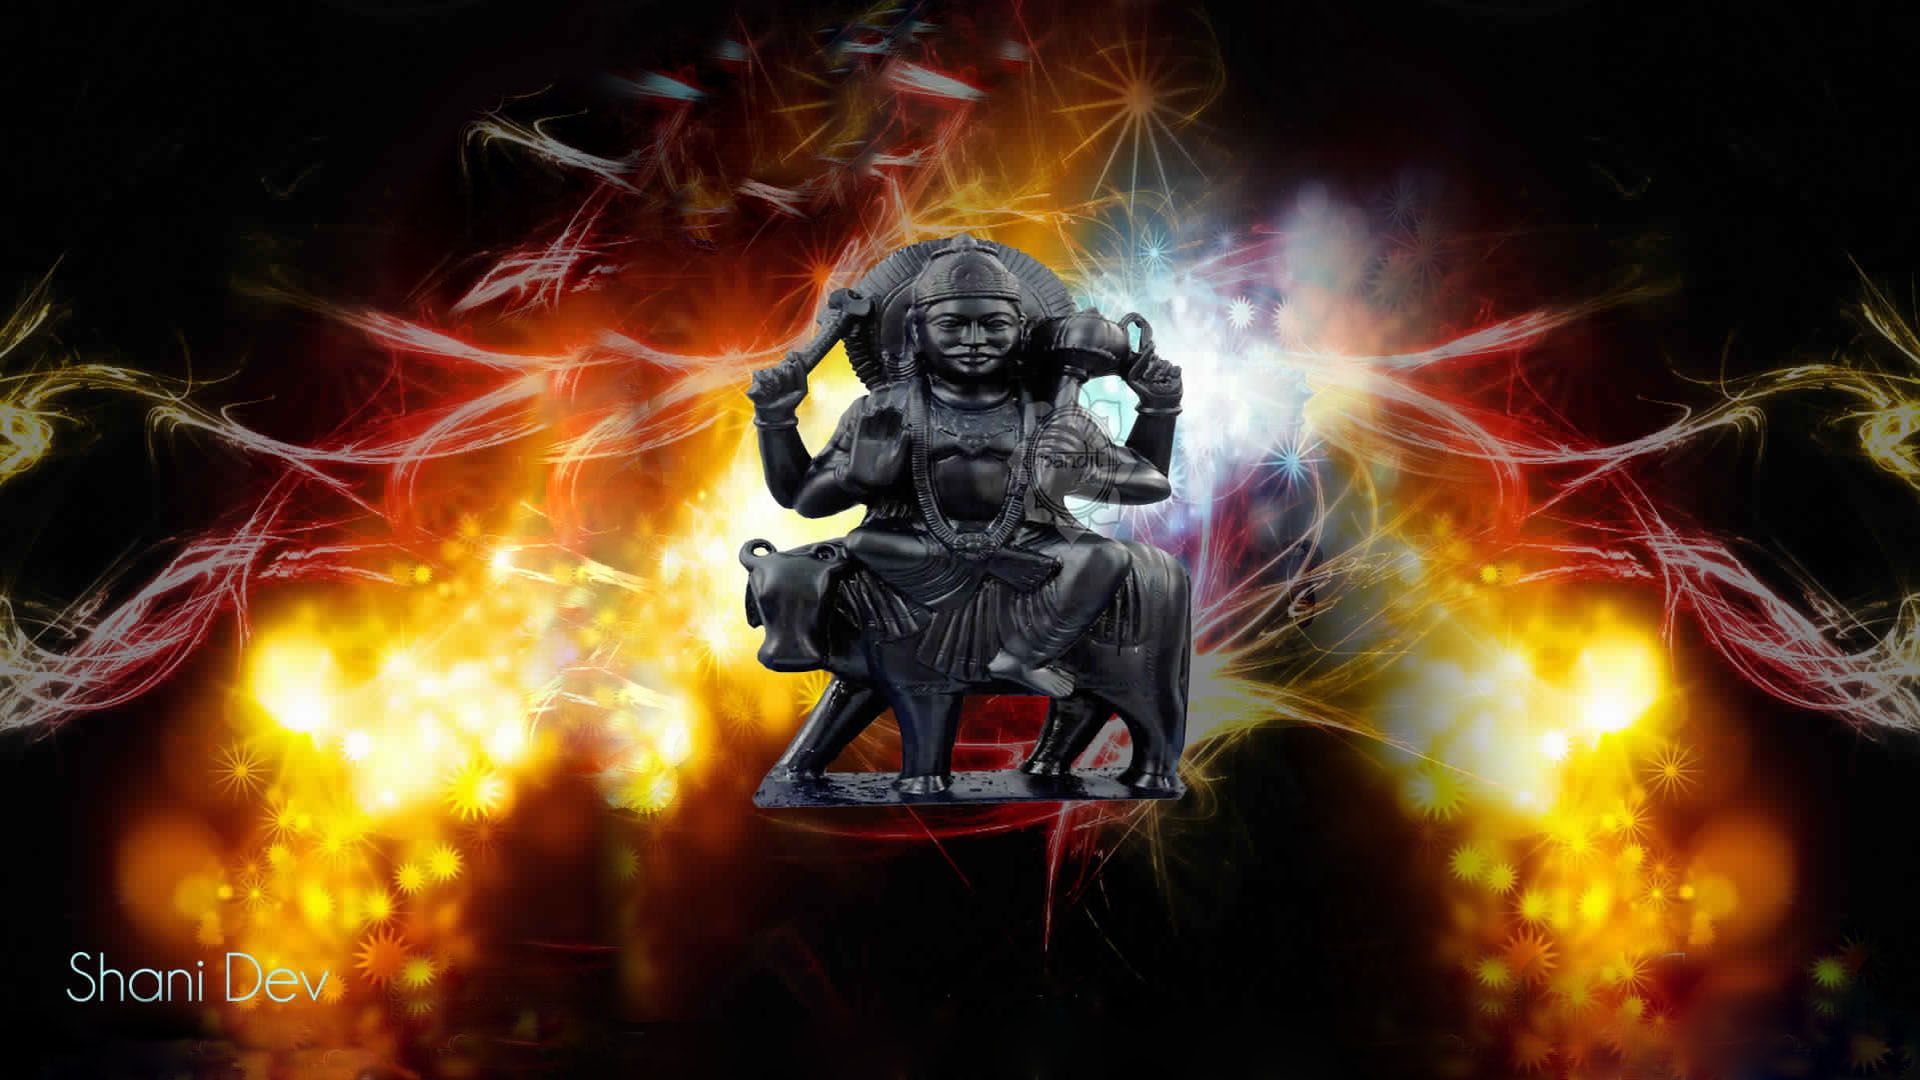 Shani Dev Image Free Download. Hindu Gods and Goddesses